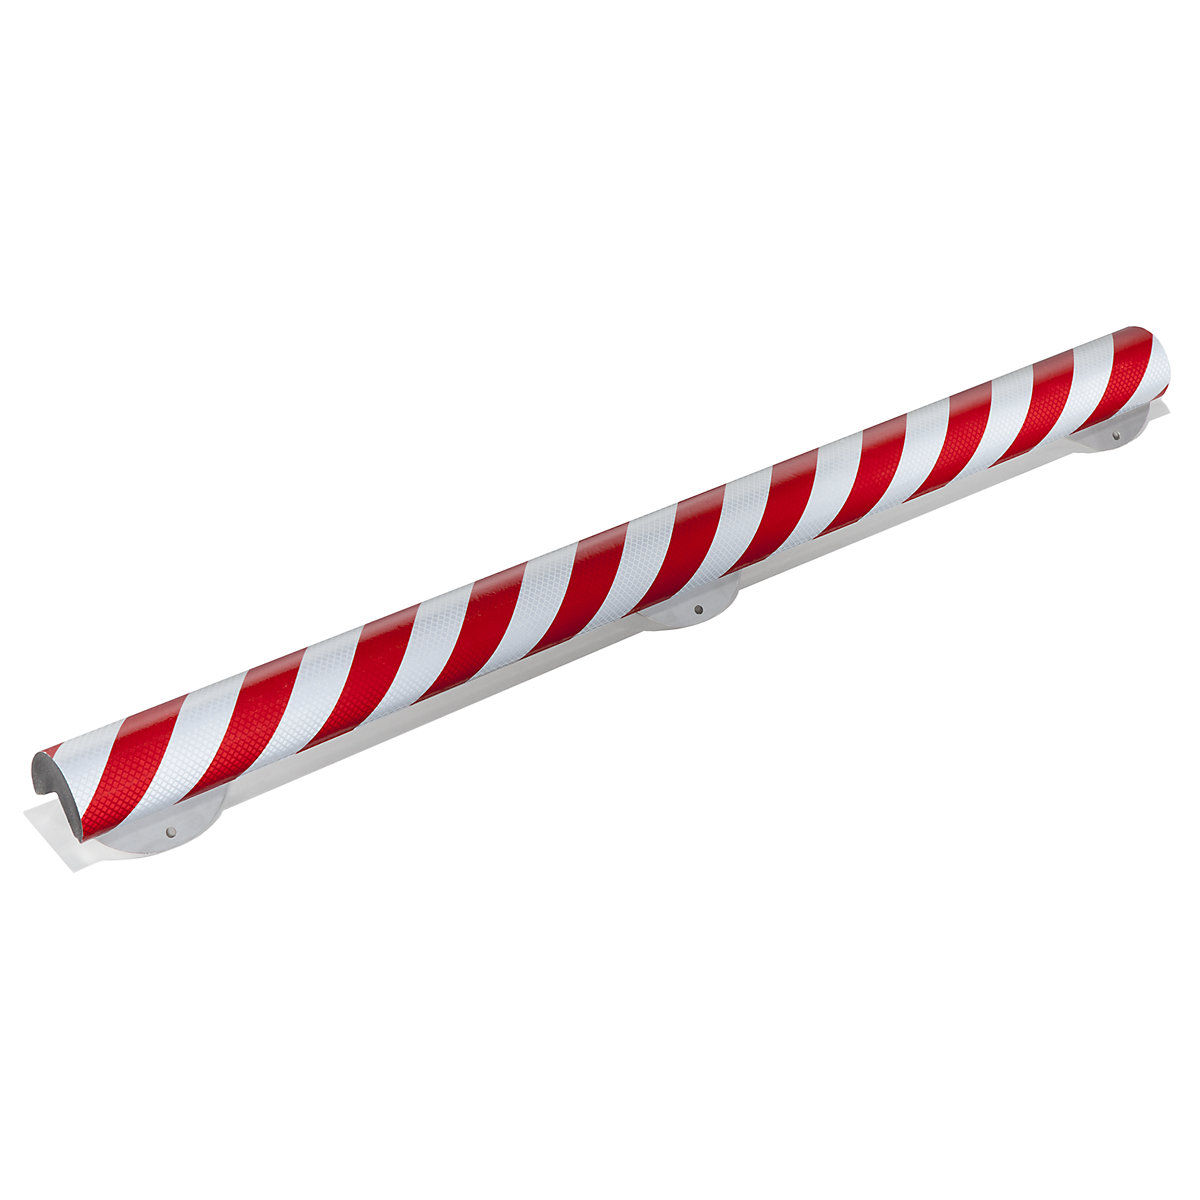 Knuffi® hoekbescherming met montagerail – SHG, type A+, stuk van 1 m, rood/wit reflecterend-10